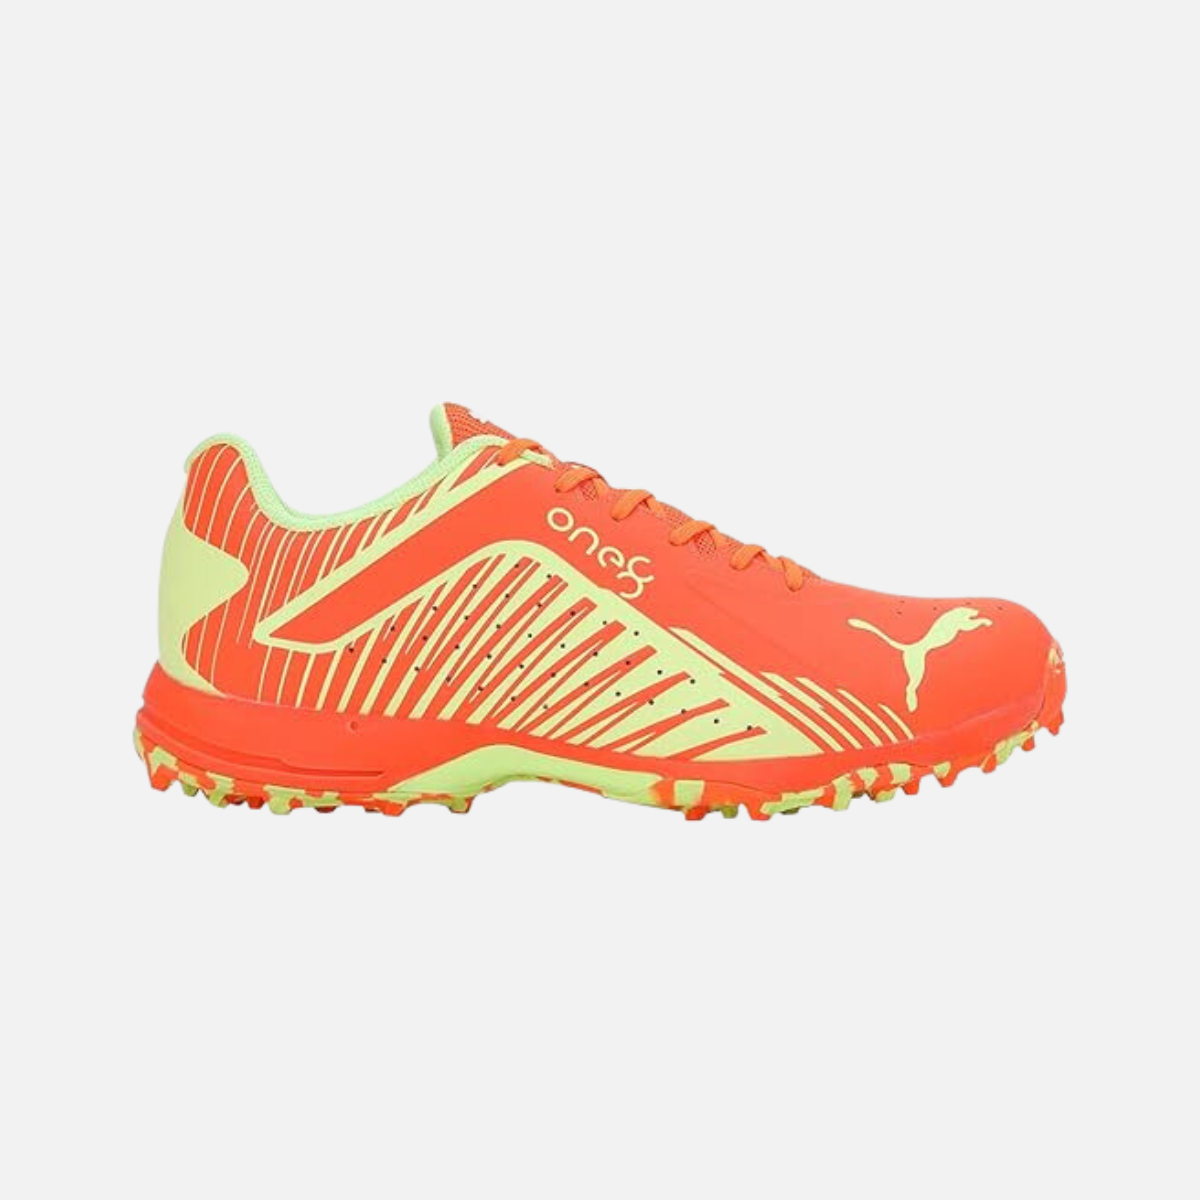 Puma 22 FH Rubber Men's Cricket Shoes -Ultra Orange/Fast Yellow